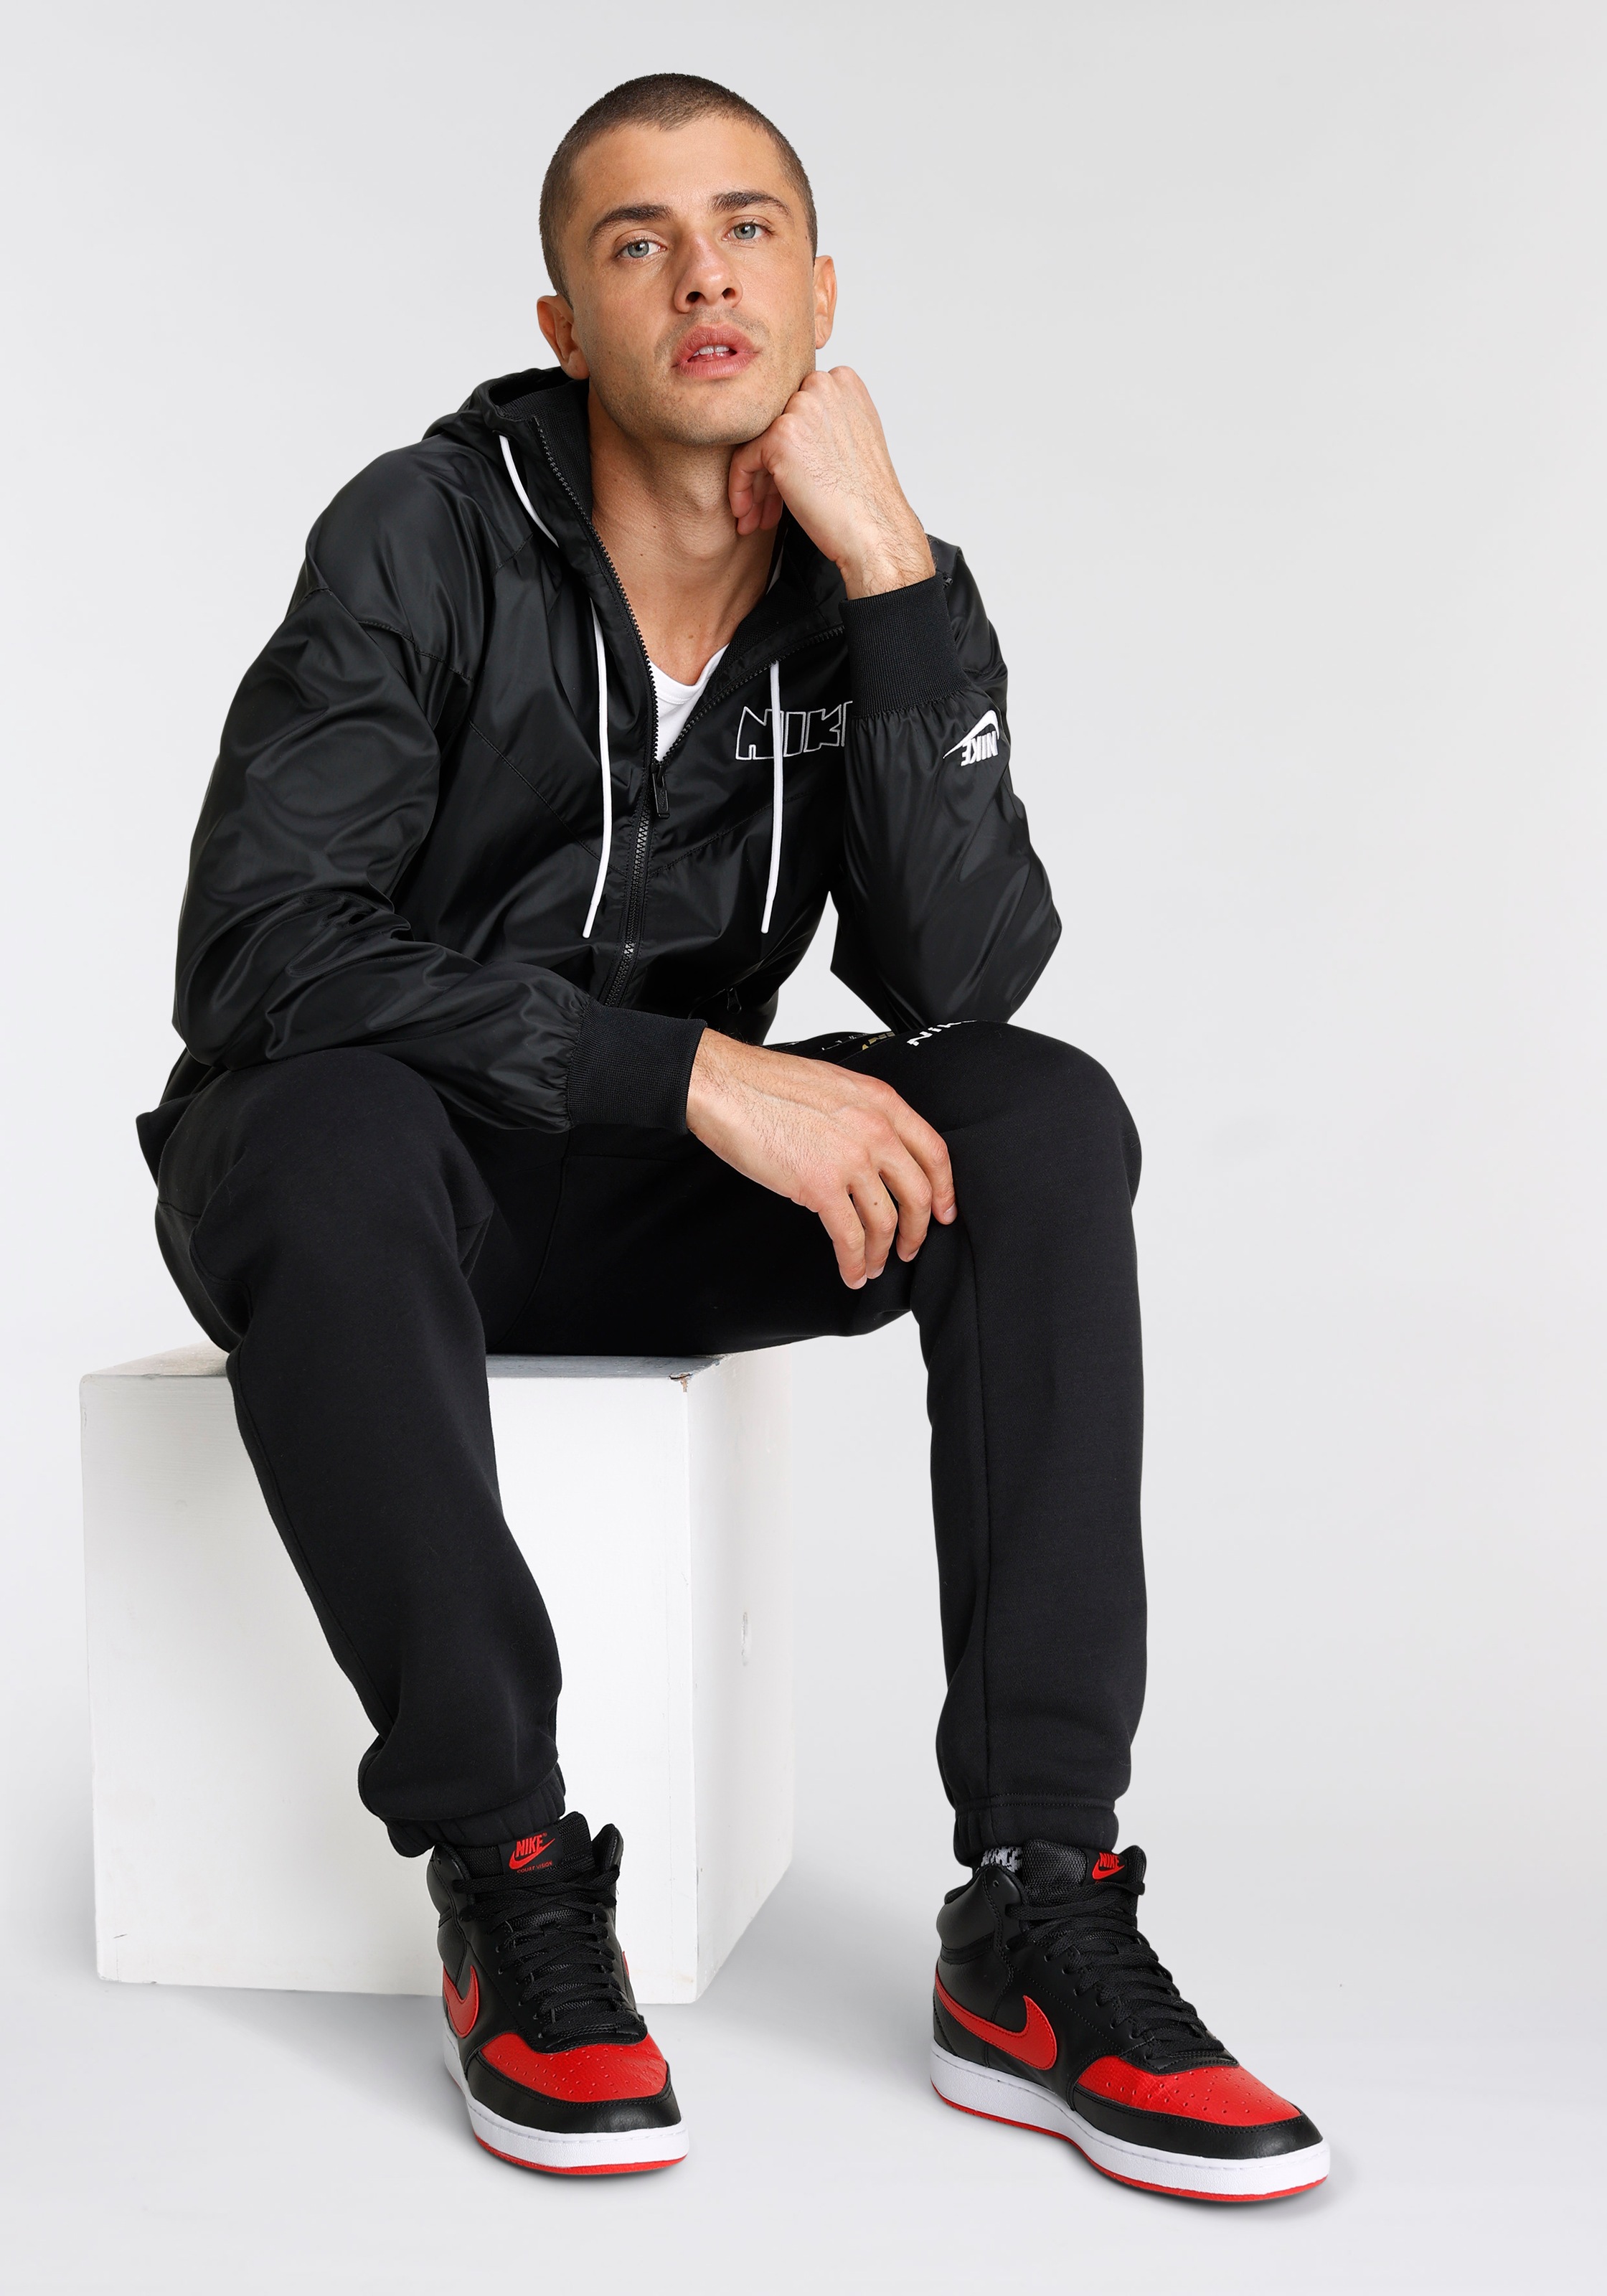 Mode Acheter en »COURT MID«, des auf 1 Air Sneaker Spuren Sportswear VISION Force ligne den Design confortablement Nike